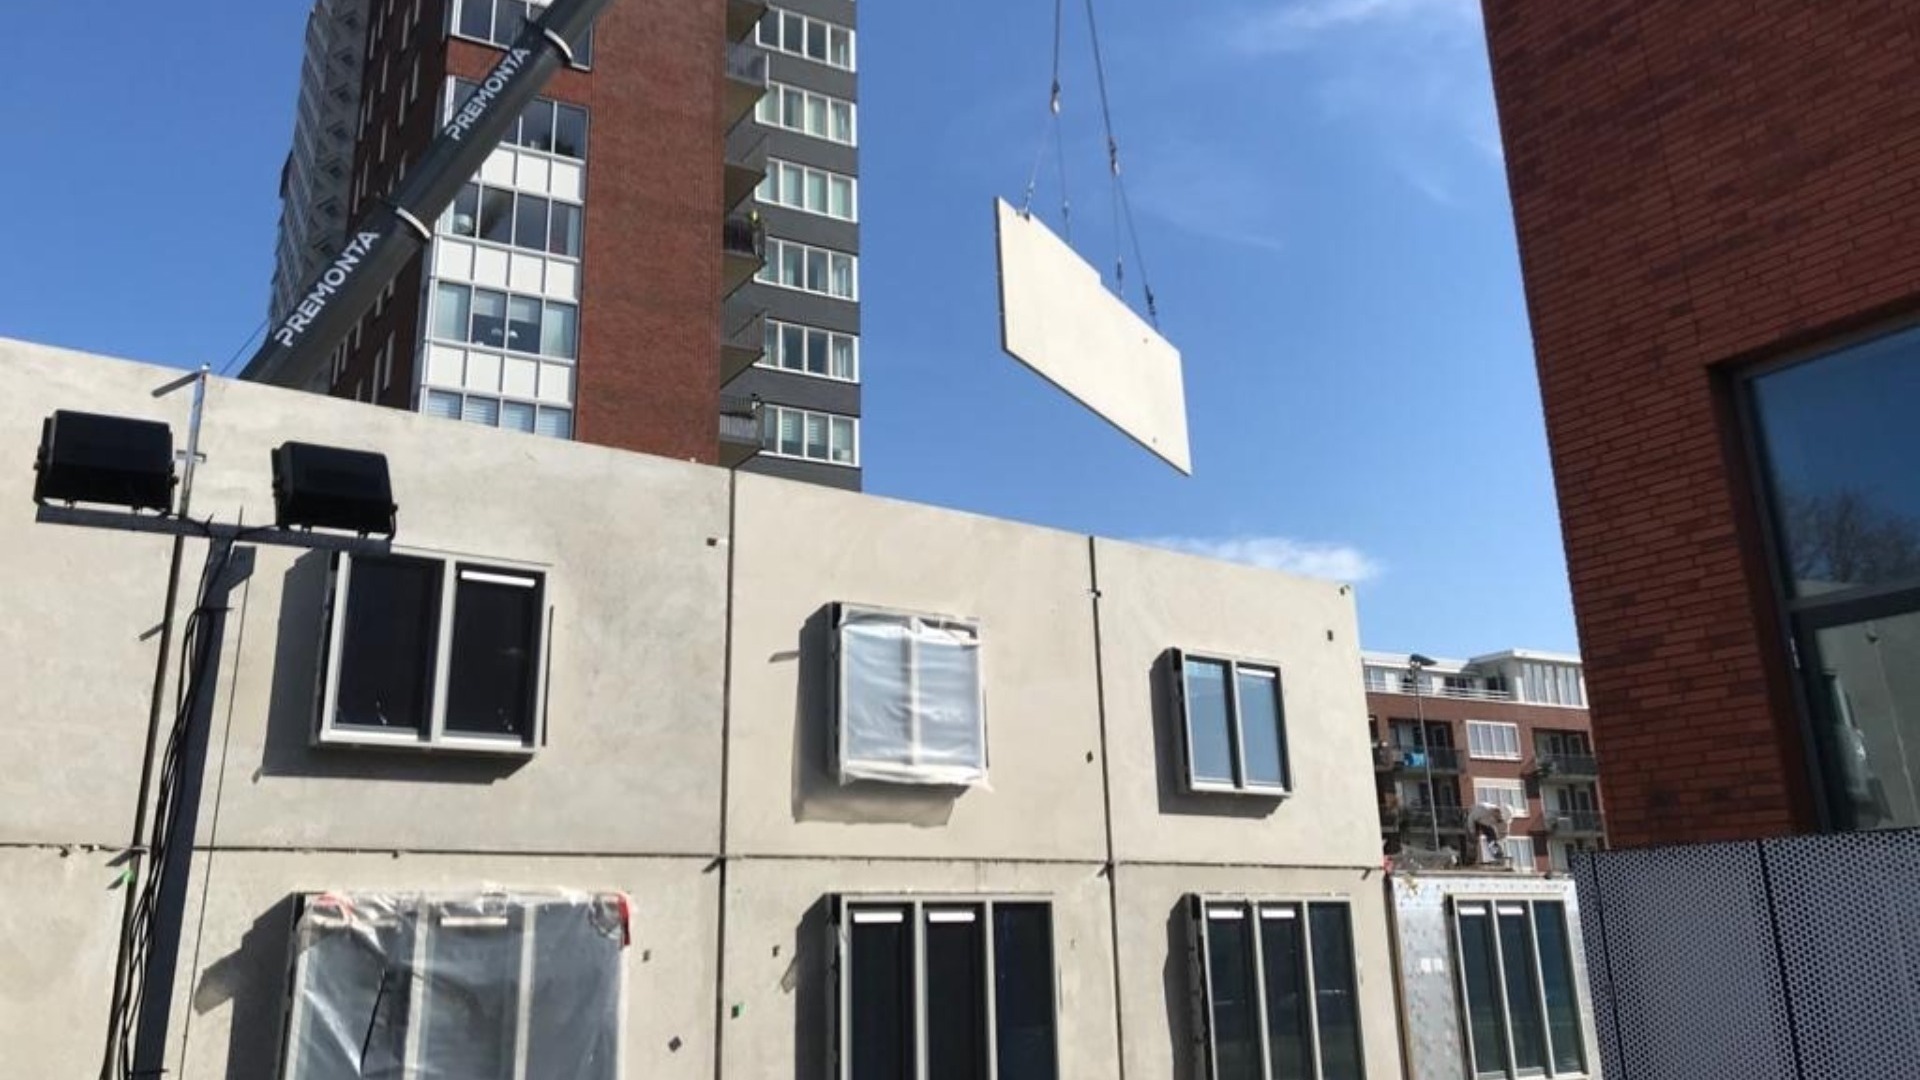 Blok A tweede verdieping - Nieuwbouwproject STOER te Haarlem. 